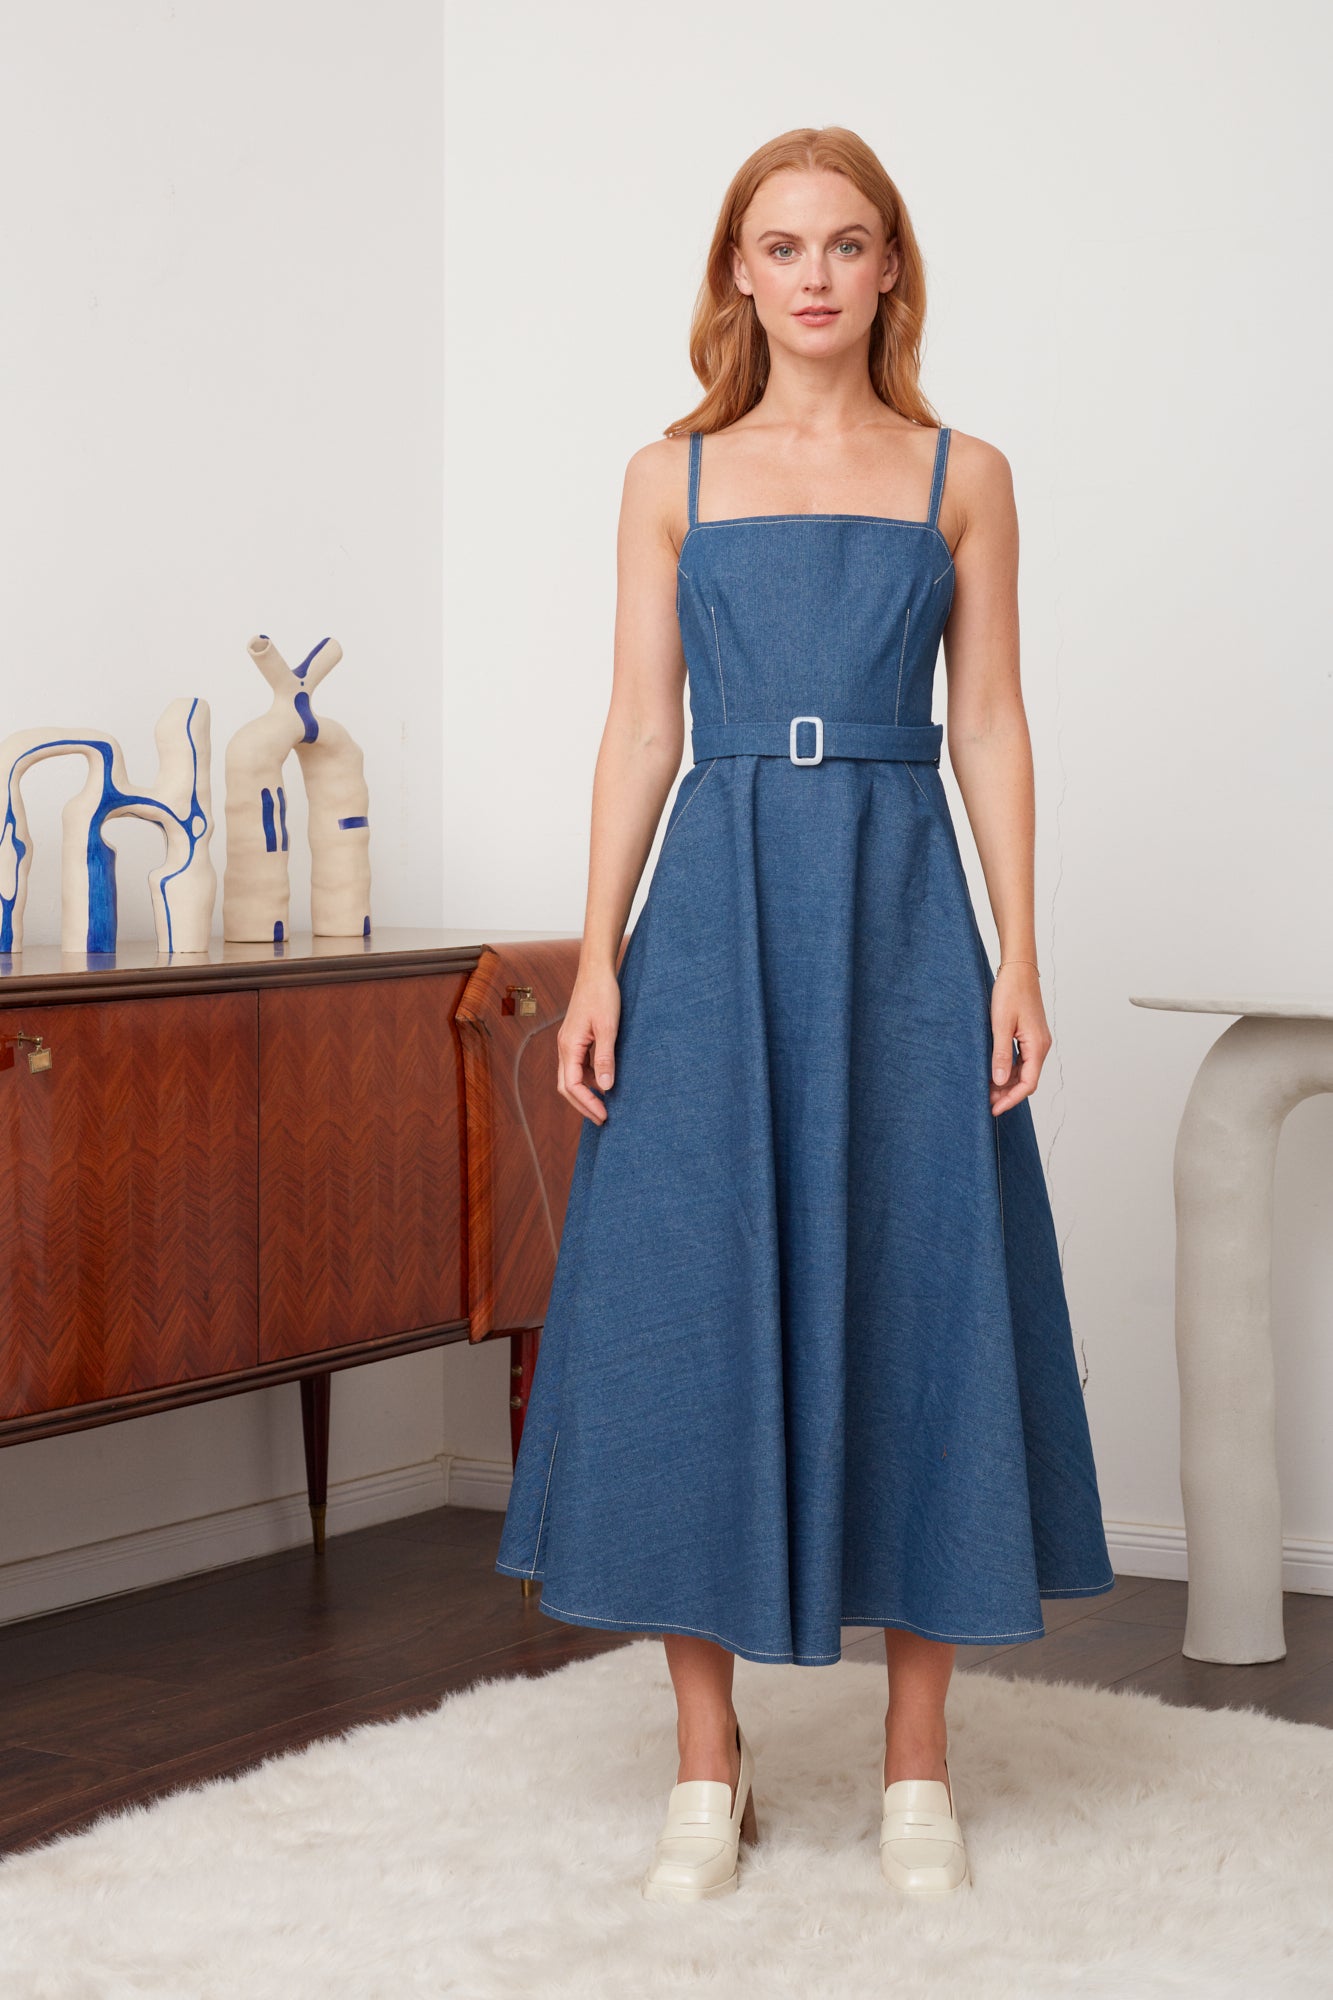 MATISSA Blue Denim Dress - Timeless Retro Appeal